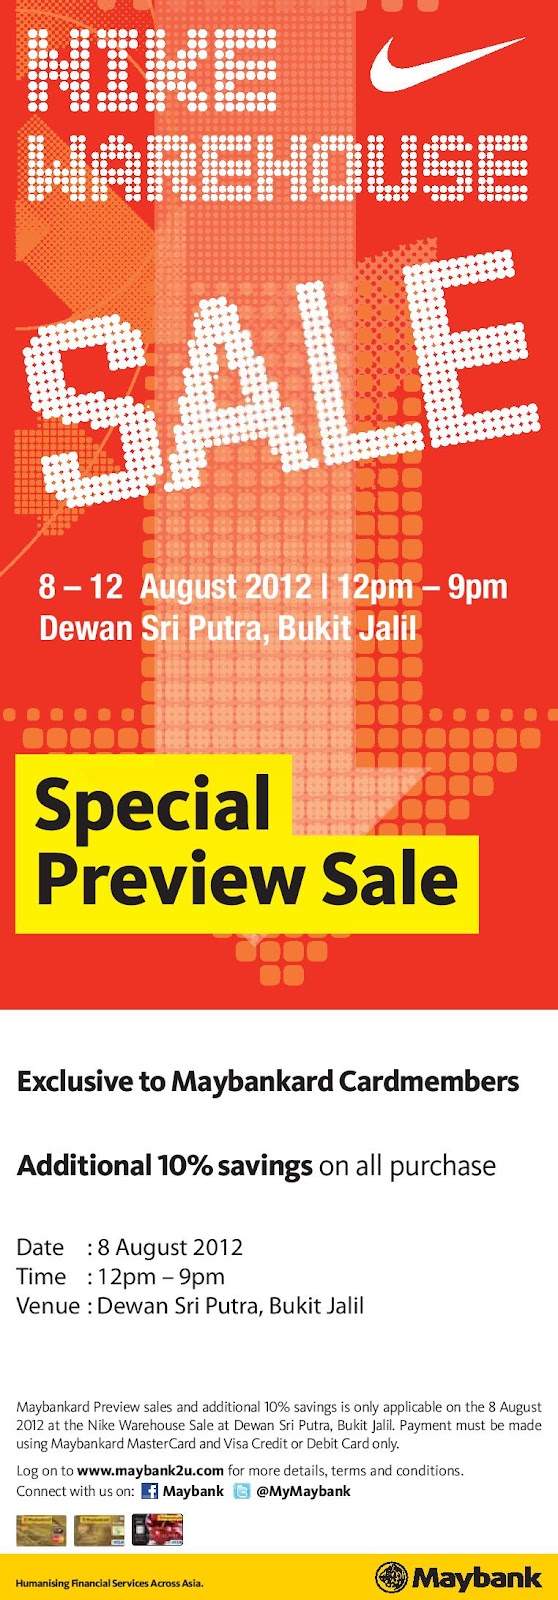 NIKE Malaysia Warehouse Sale 2012